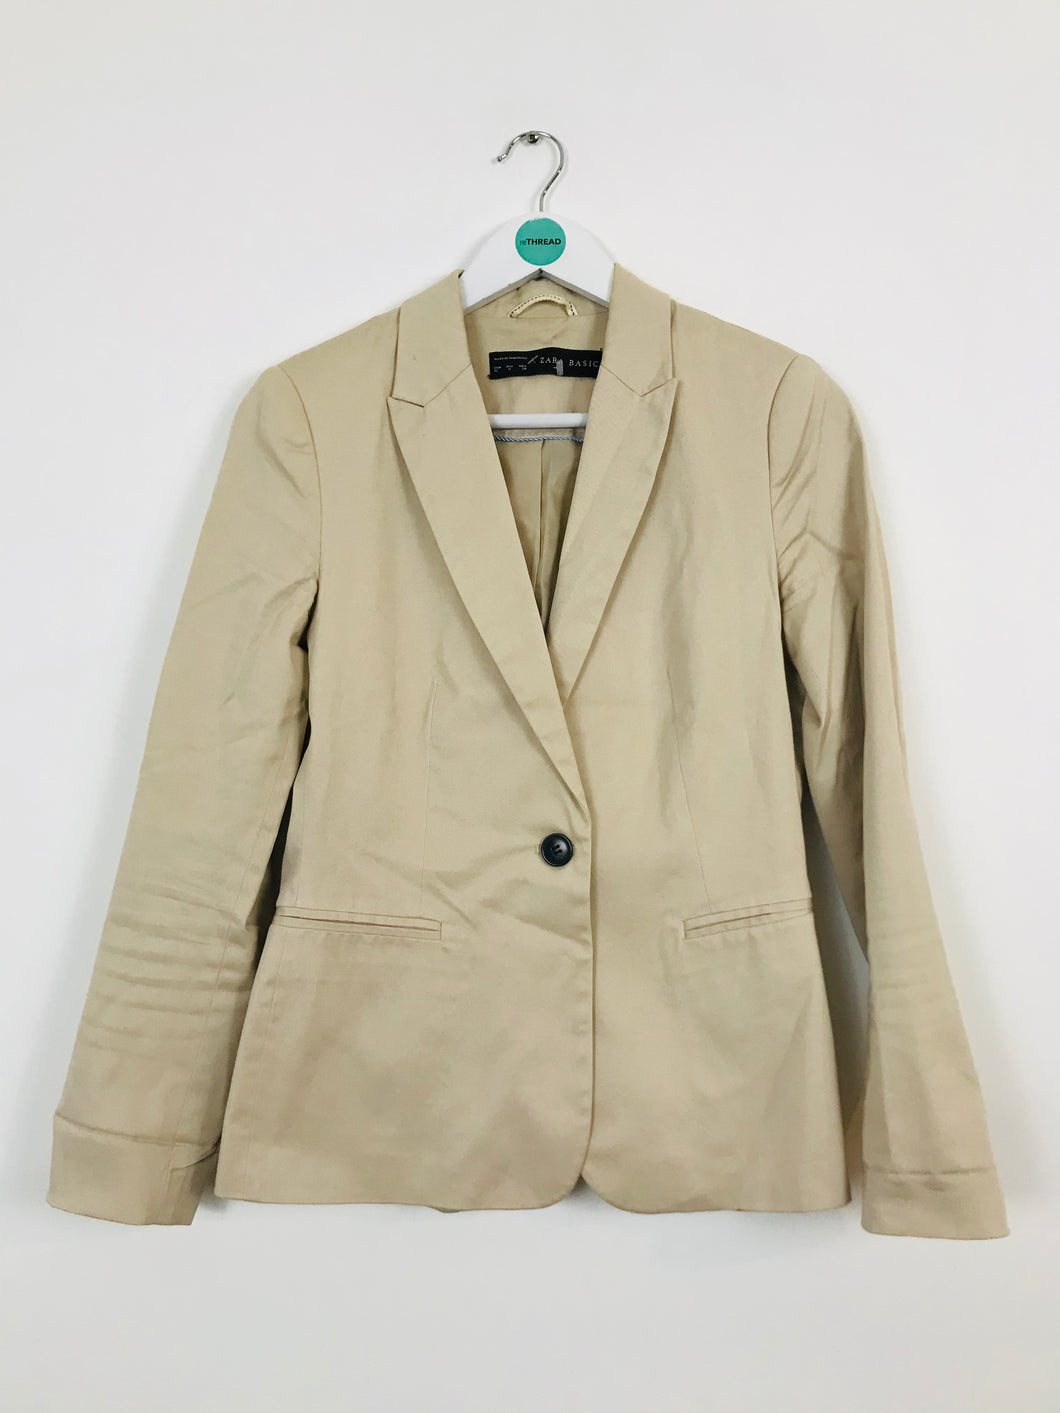 Zara Women’s Tailored Blazer Suit Jacket | M | Beige